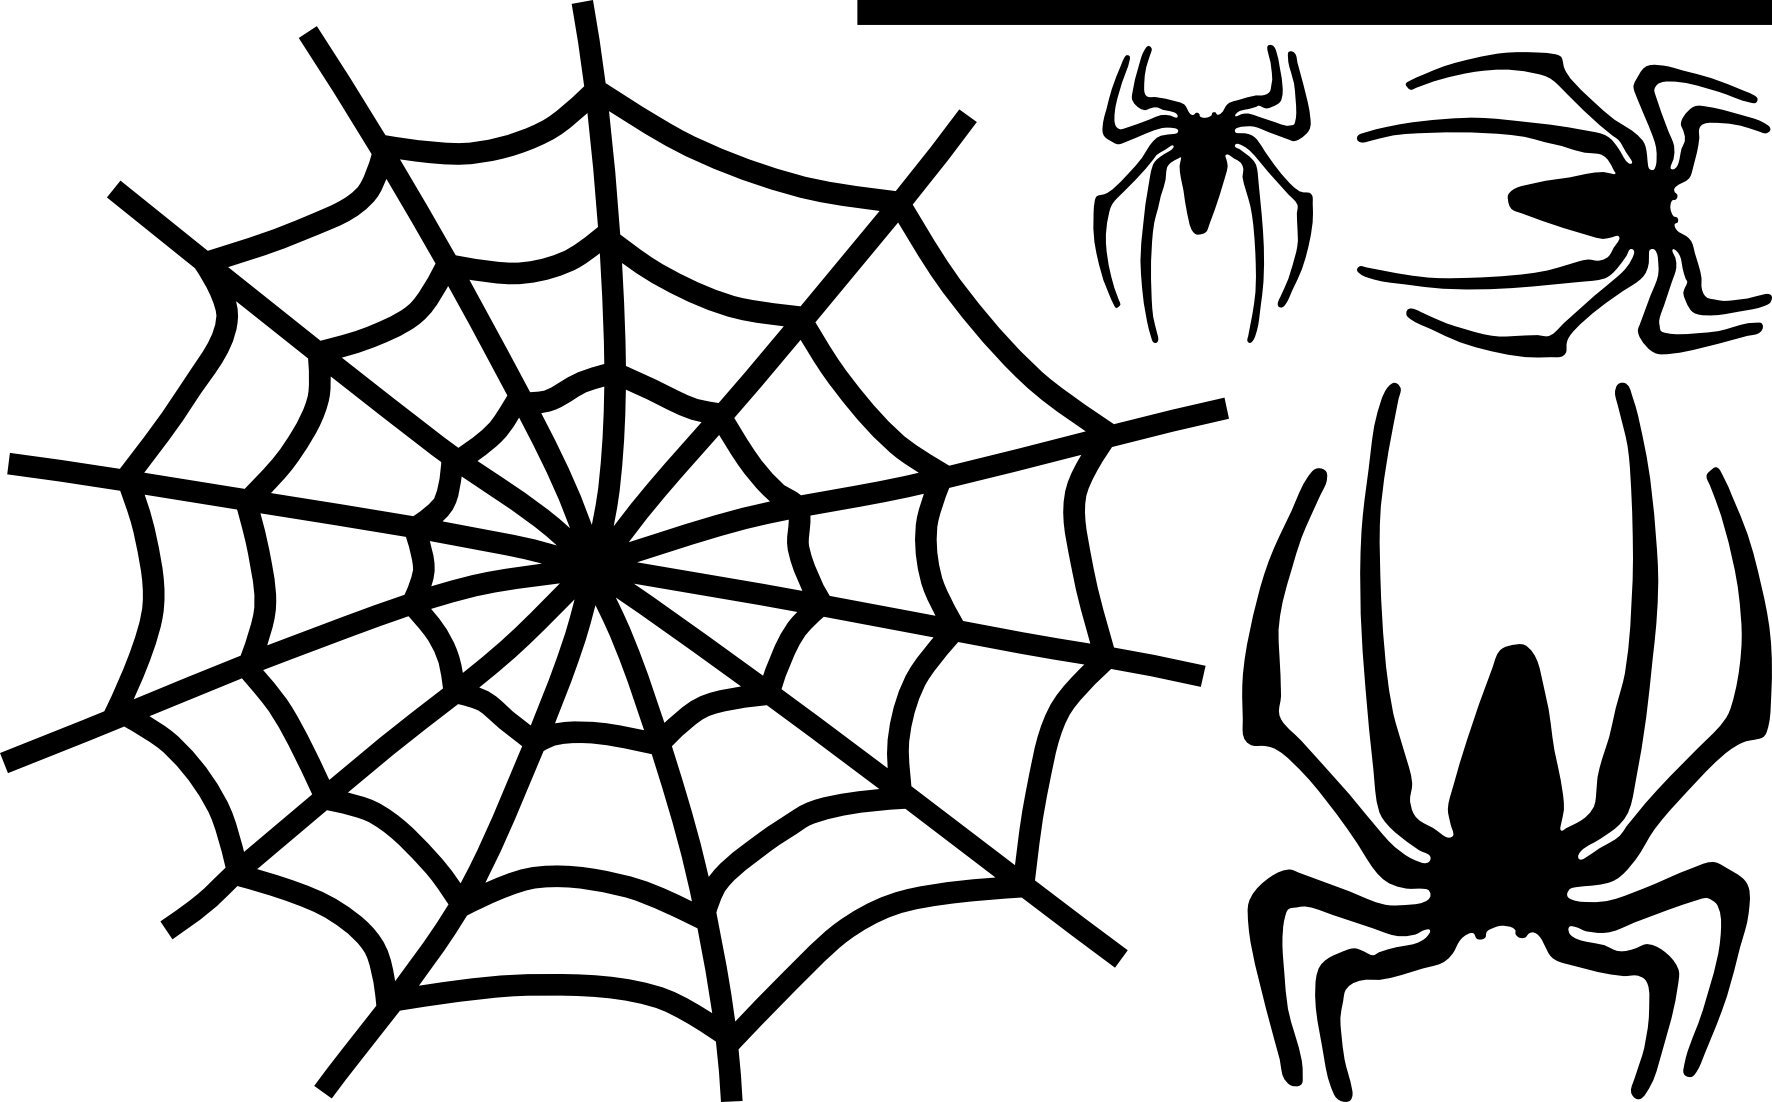 Паутина человека паука без паука. Человек паук паутина с пауком. Спайдермен паутина и паук. Путинка человек паук. Паук на паутине.